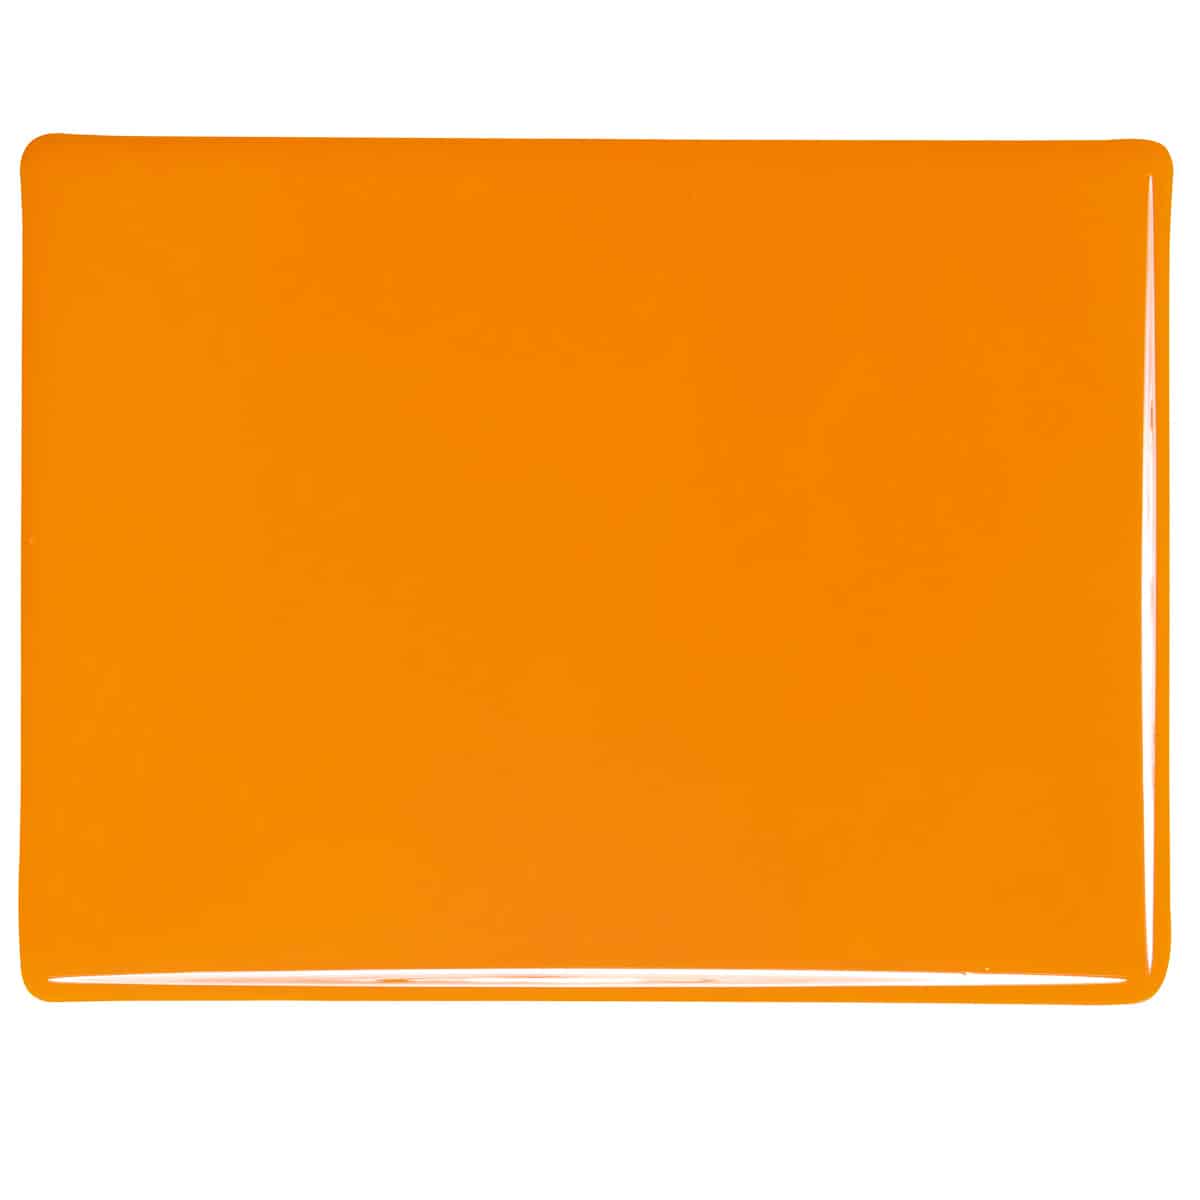 Pumpkin Orange Opal sheet glass swatch